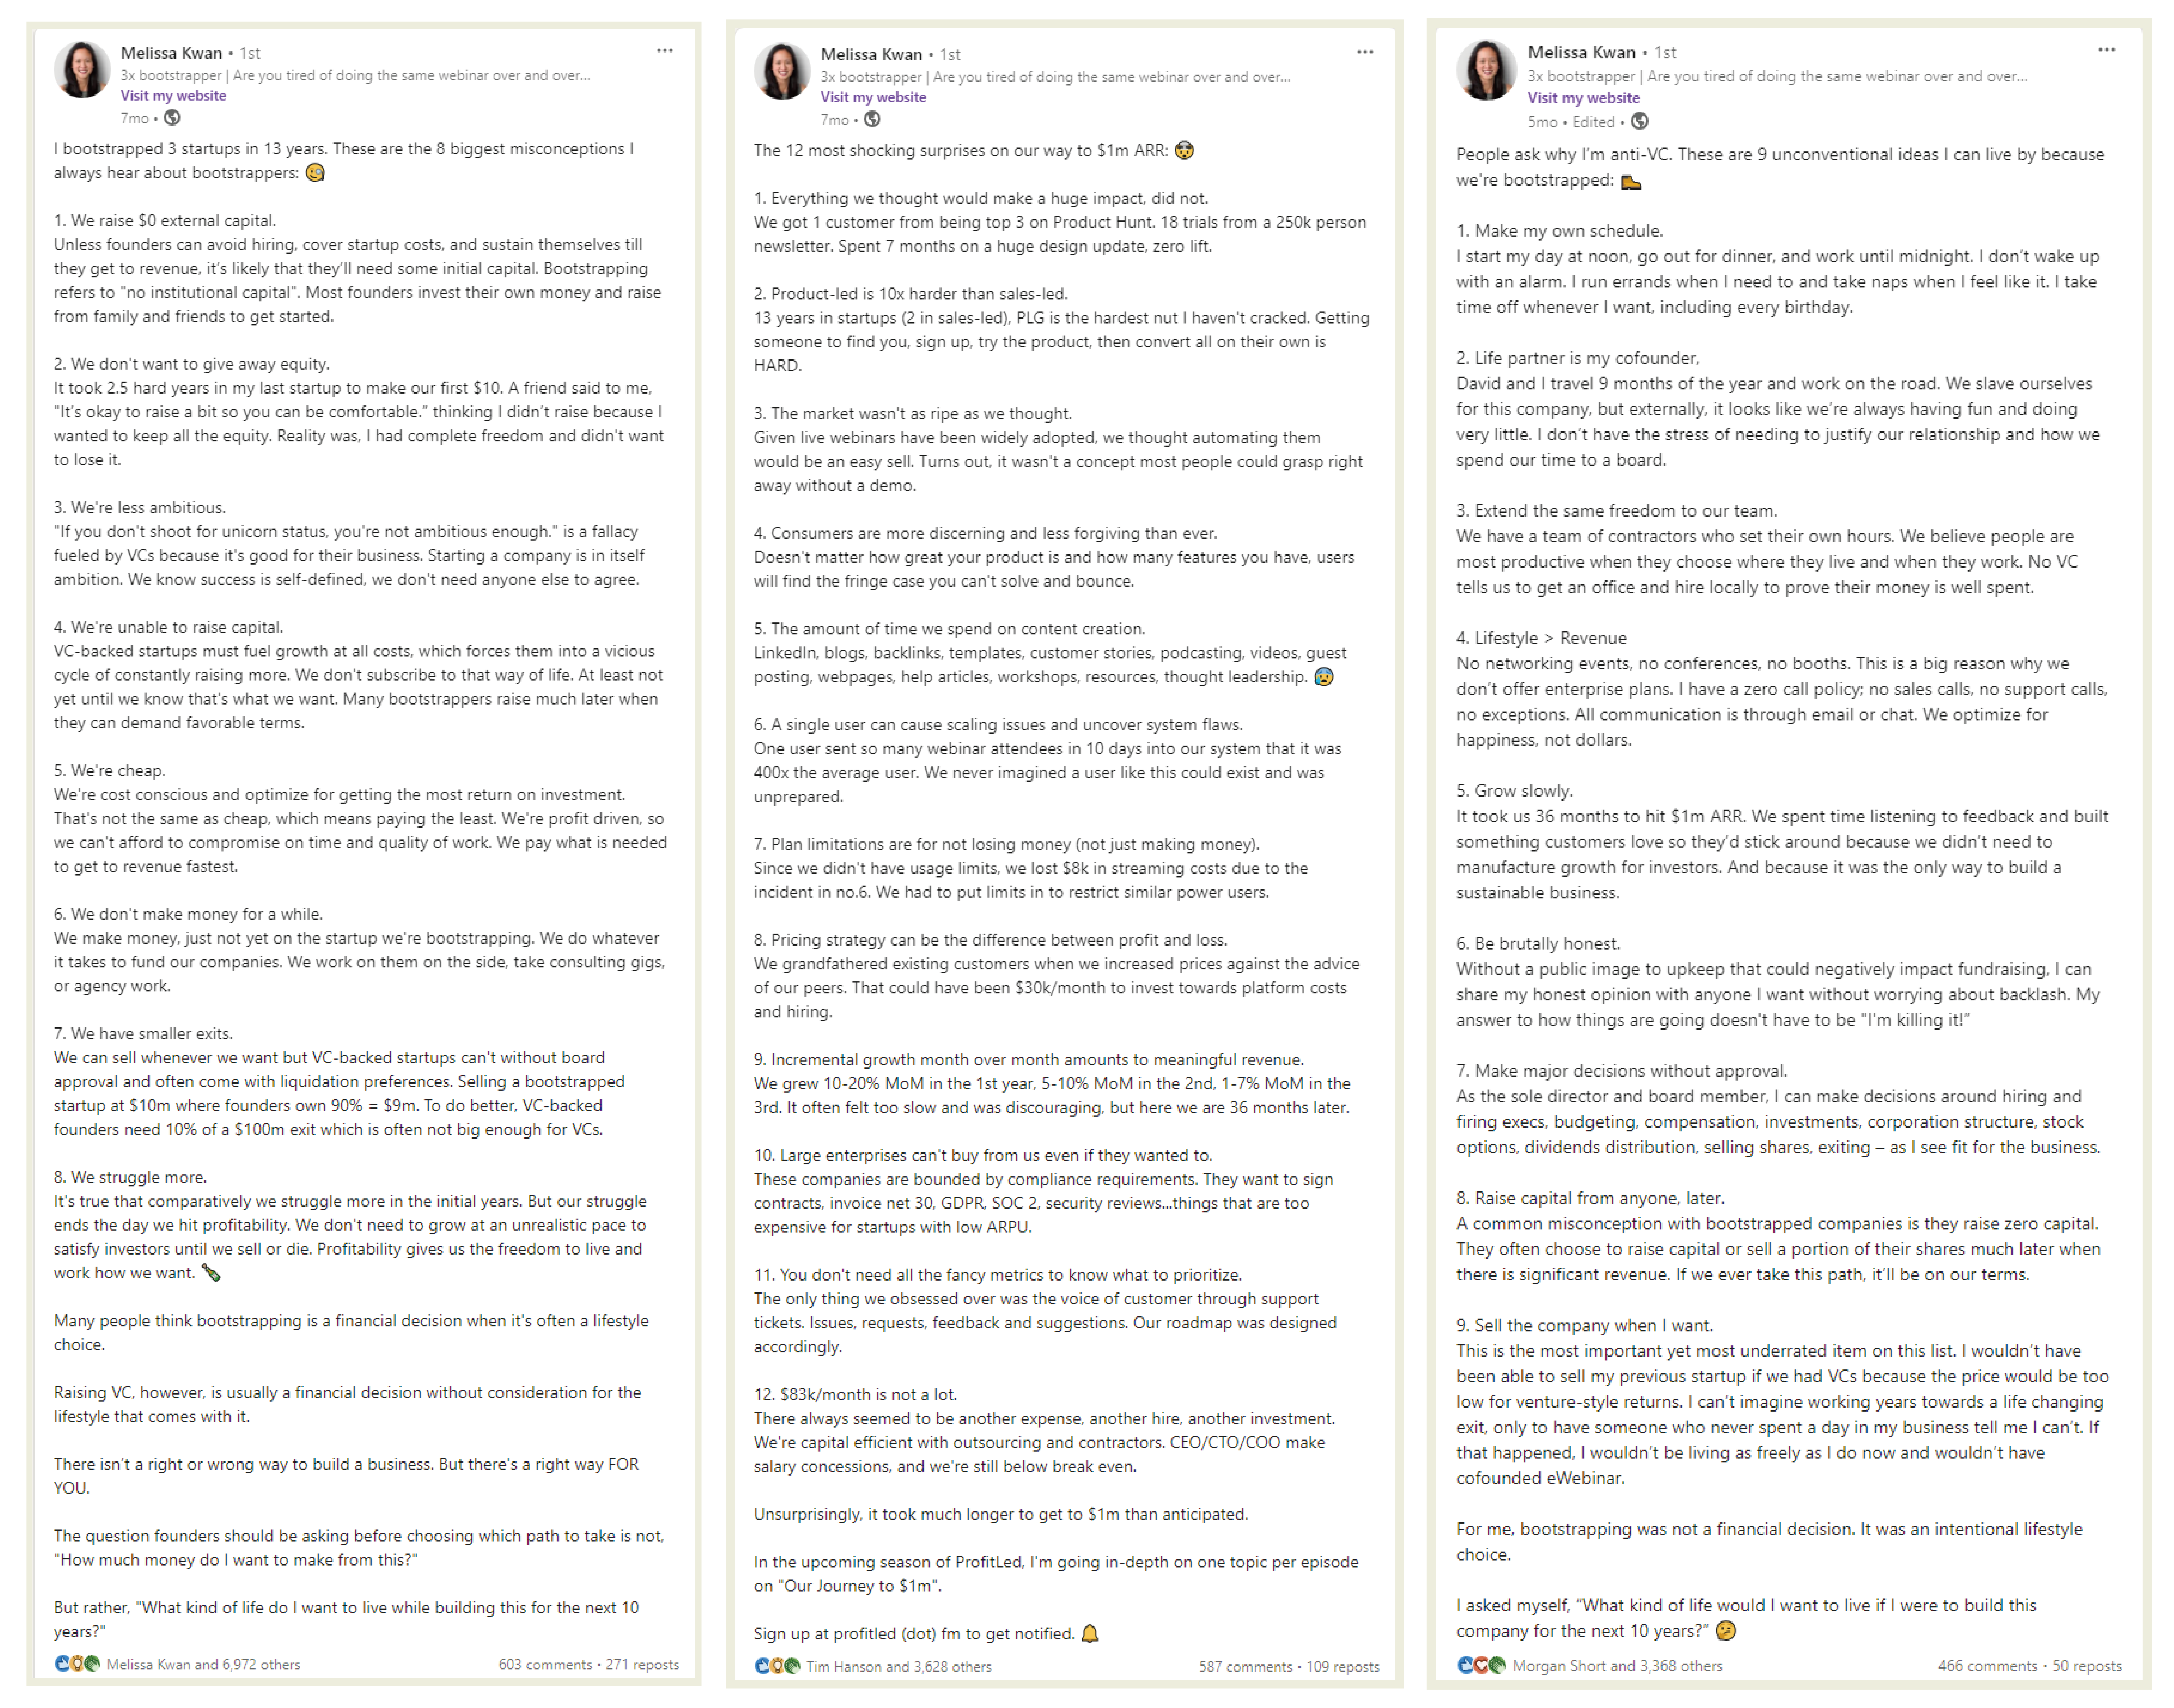 Melissa-Kwan-LinkedIn-post-collage